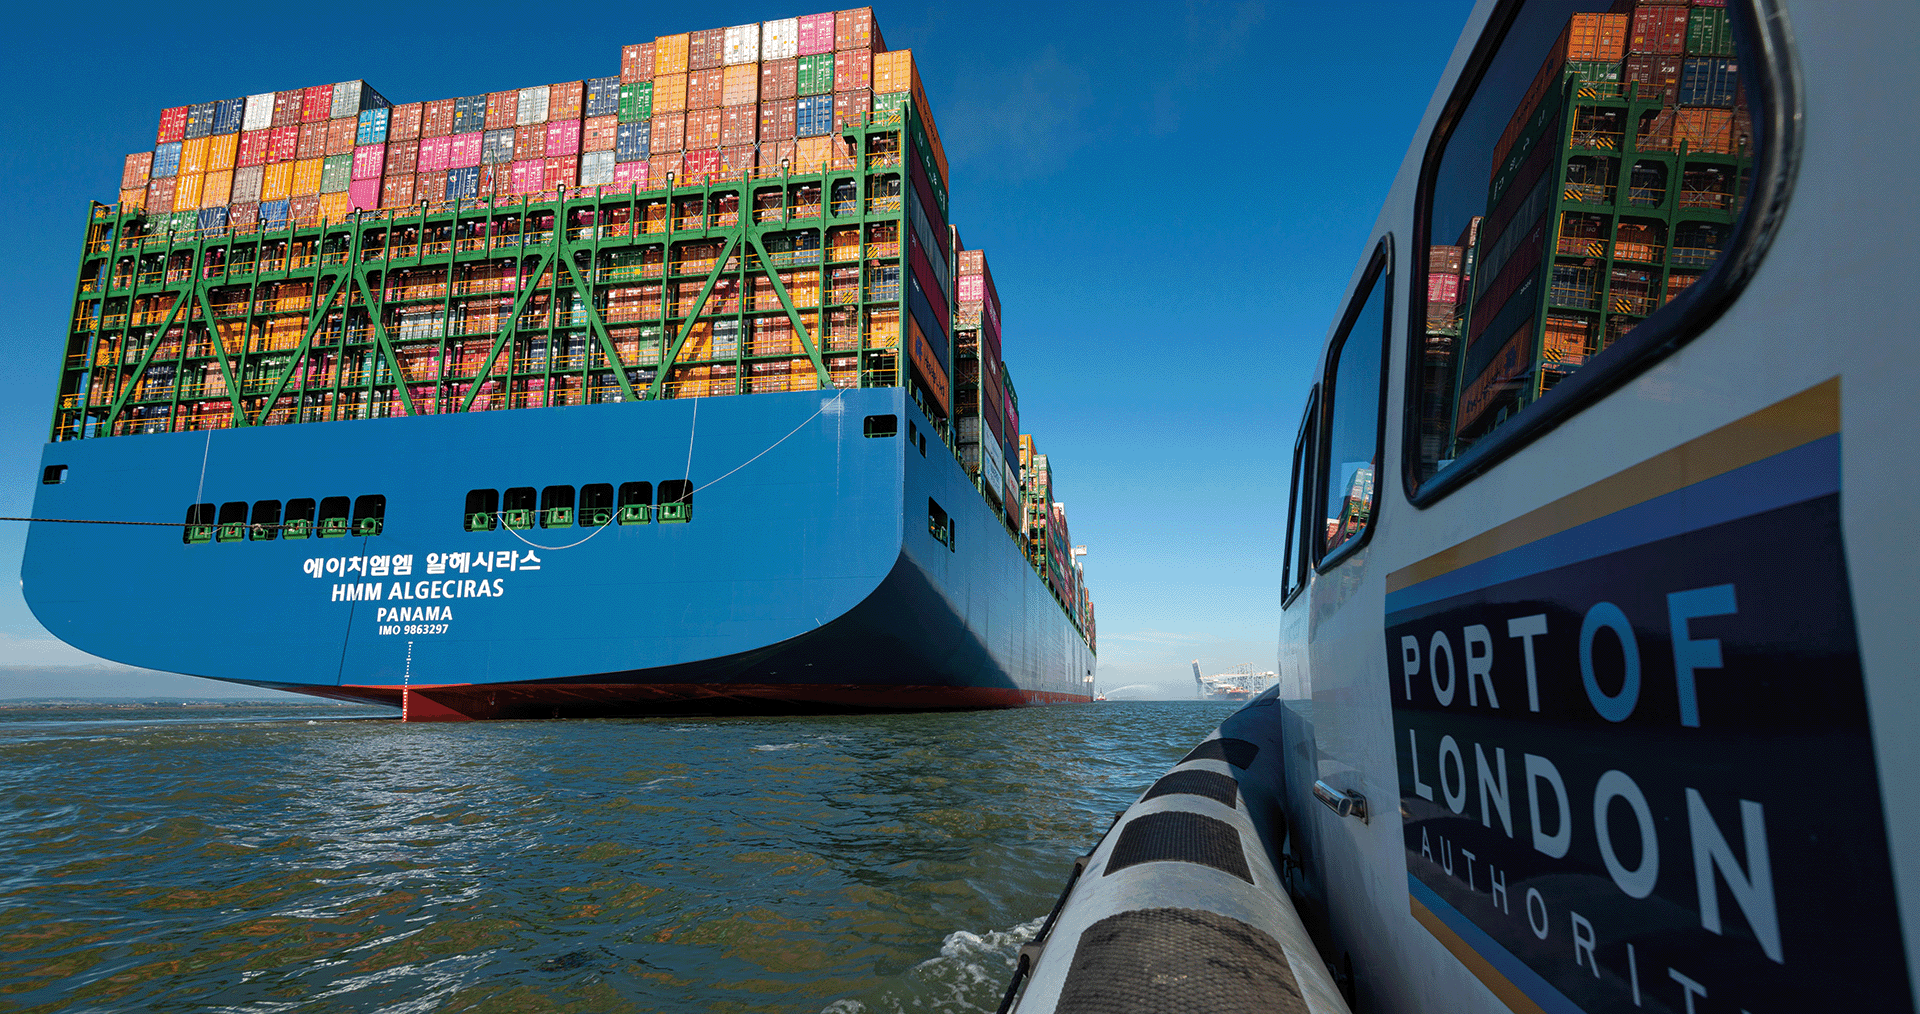 HMM Algeciras cargo ship calls at London Gateway